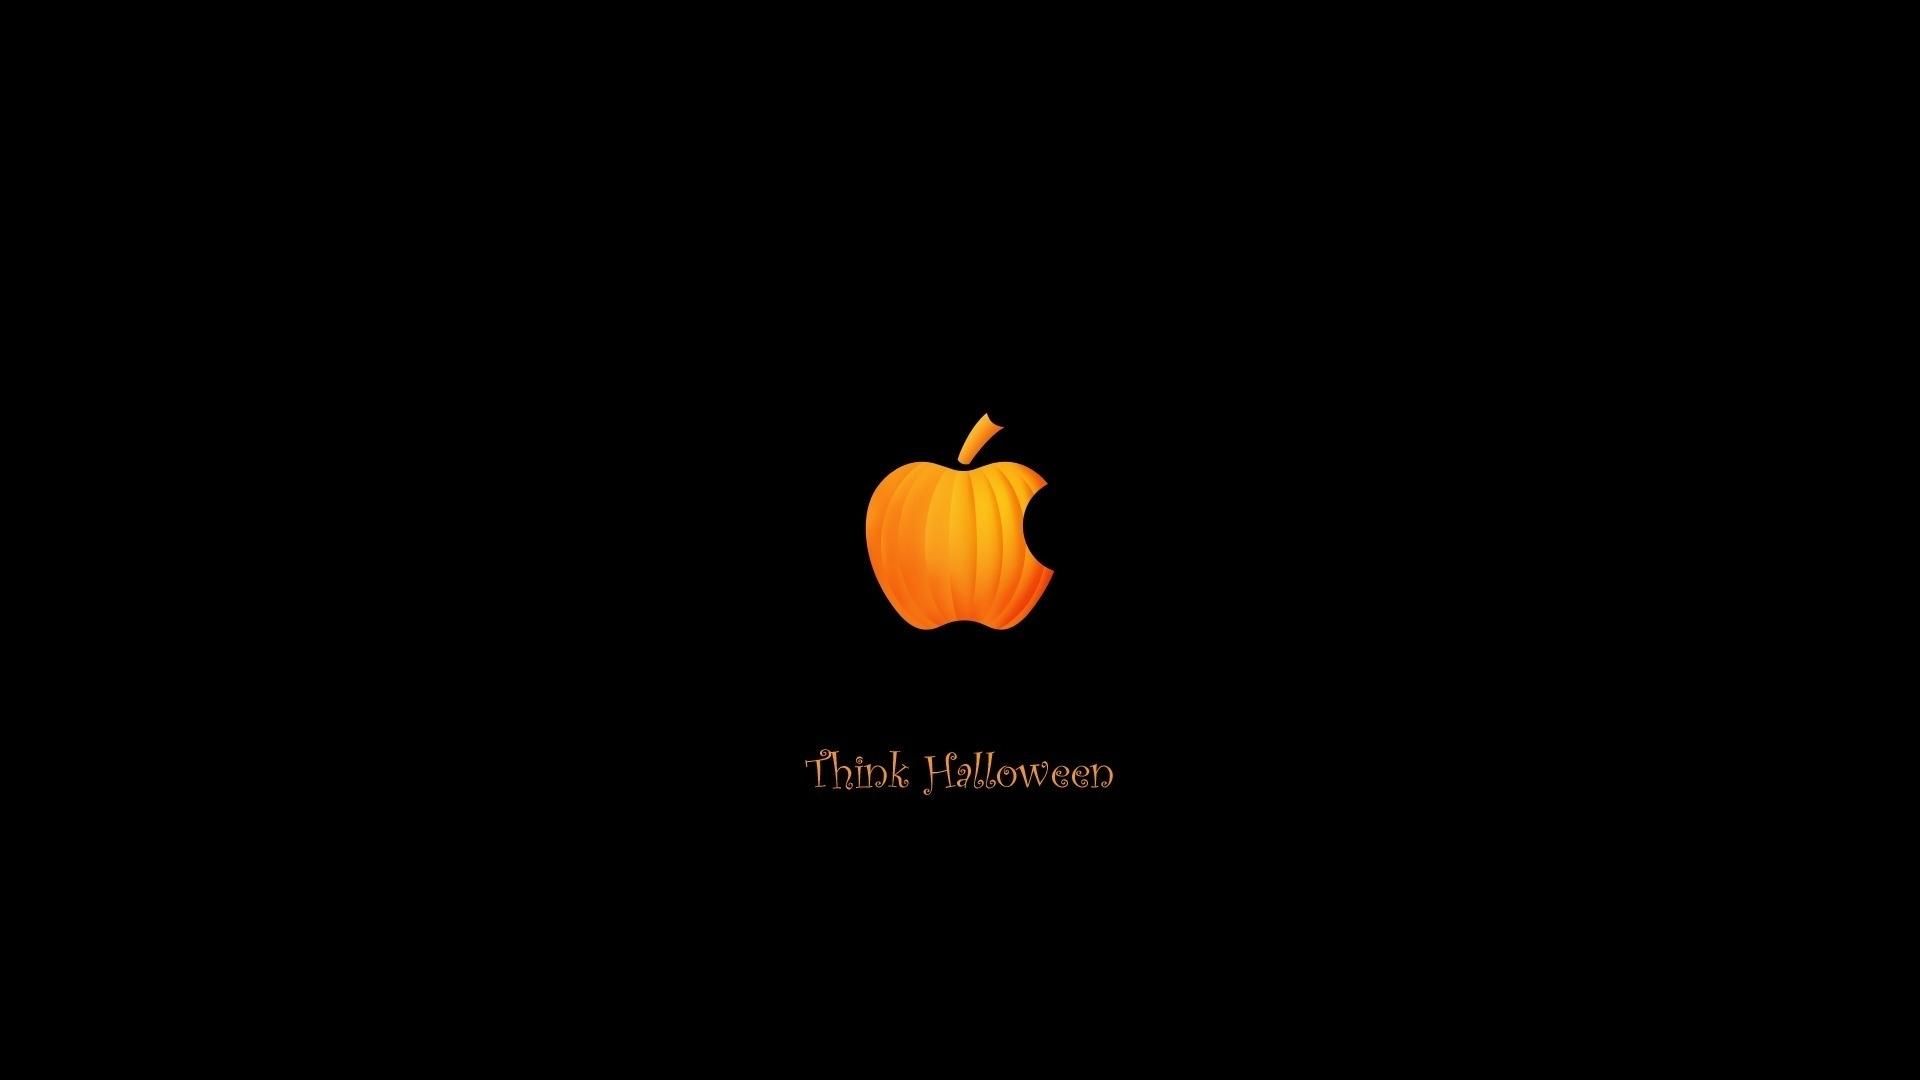 Orange Halloween Apple Logo Wallpaper Wallfinest | HD Wallpapers Range